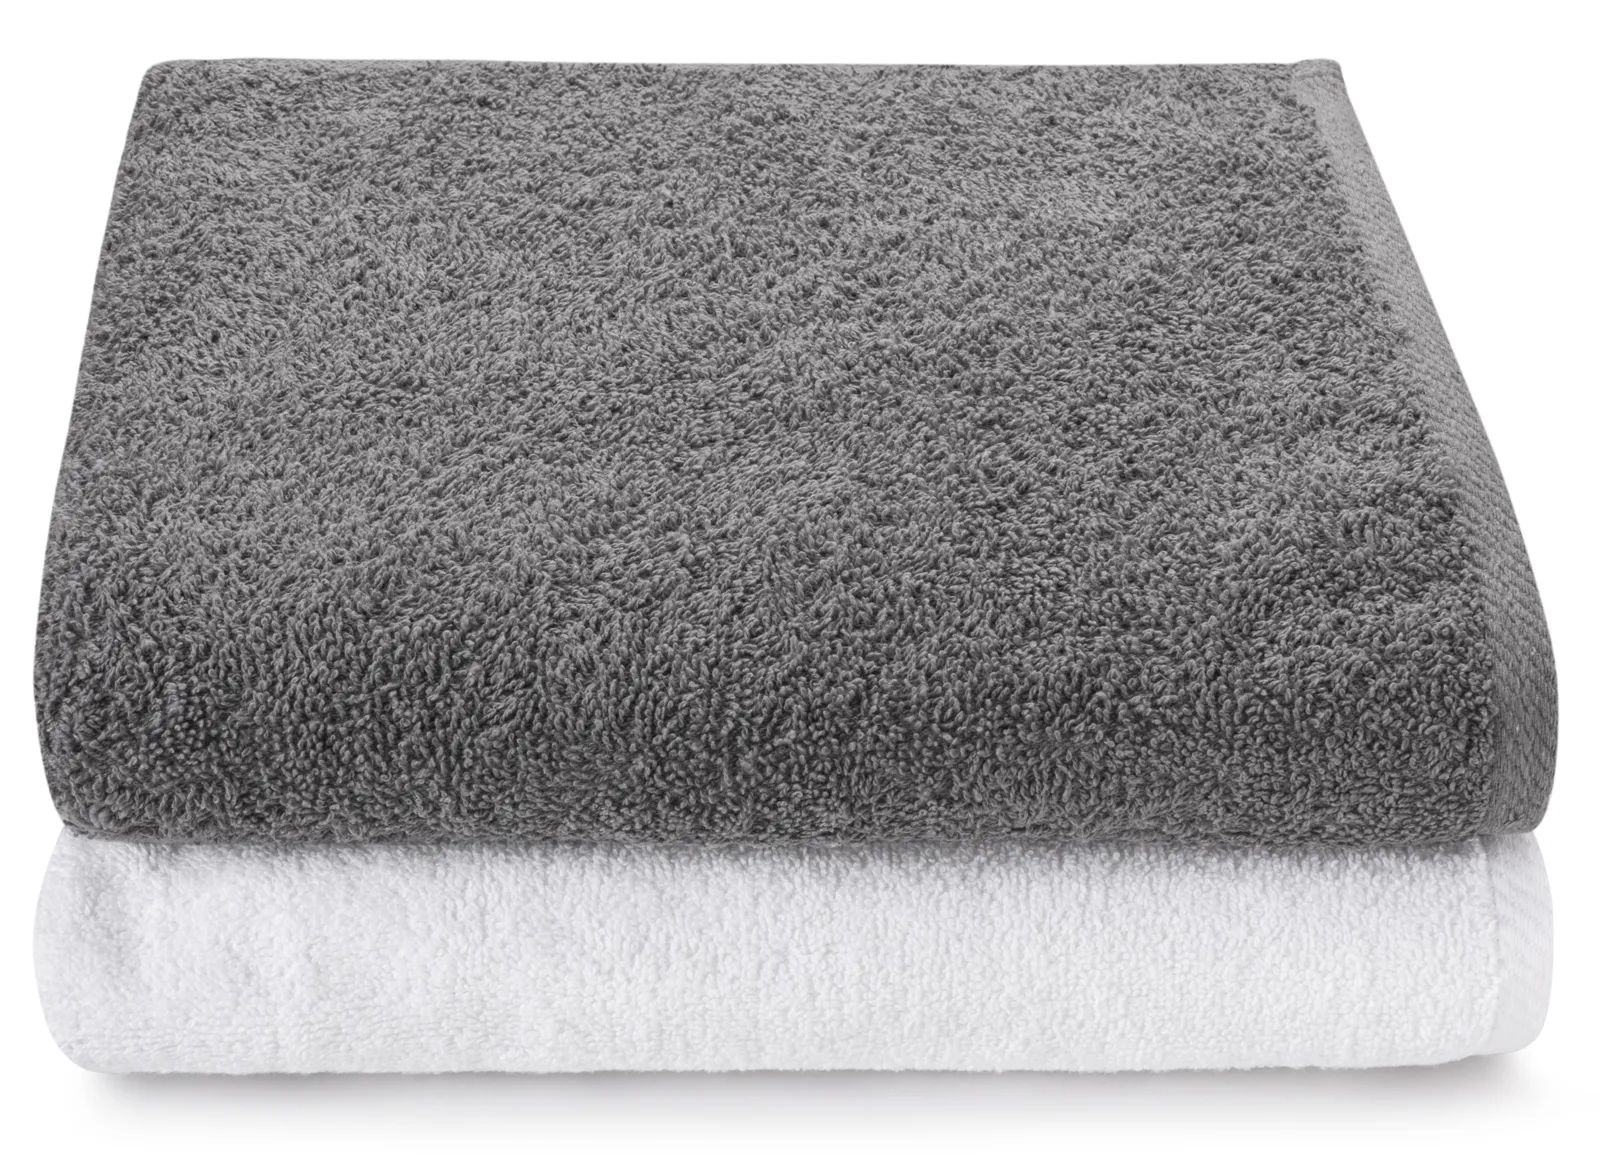 BIG 150×100 cm Parama Towels 2 pc set white and gray 500 g/m²